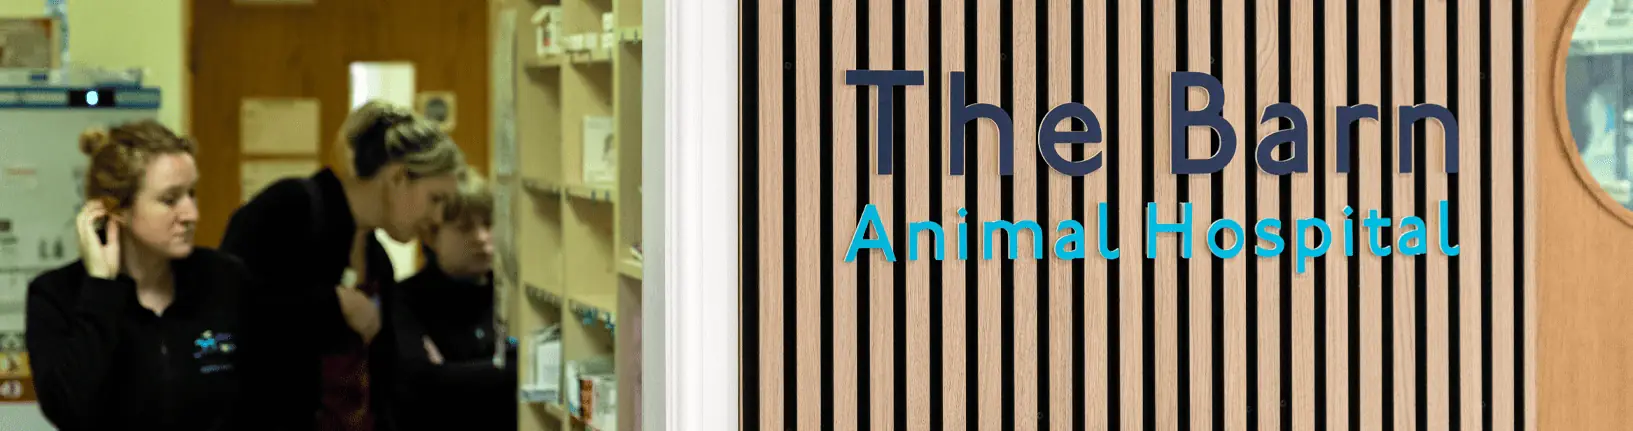 The Barn Animal Practice Pharmacy